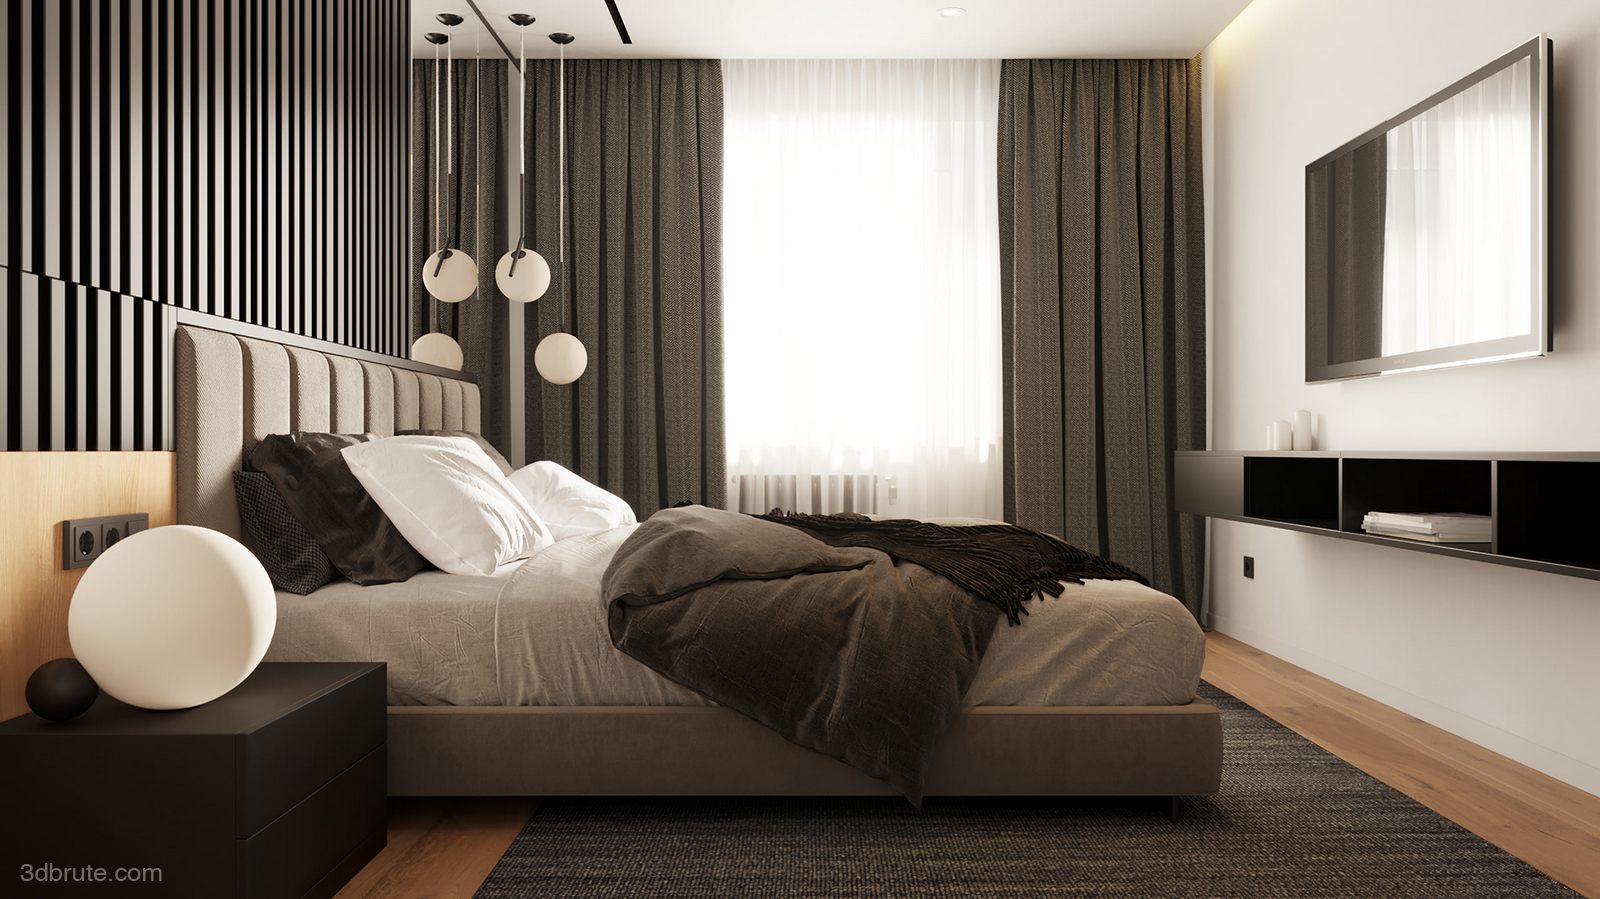 Fresh and elegant Nordic living space idea 3dbrute